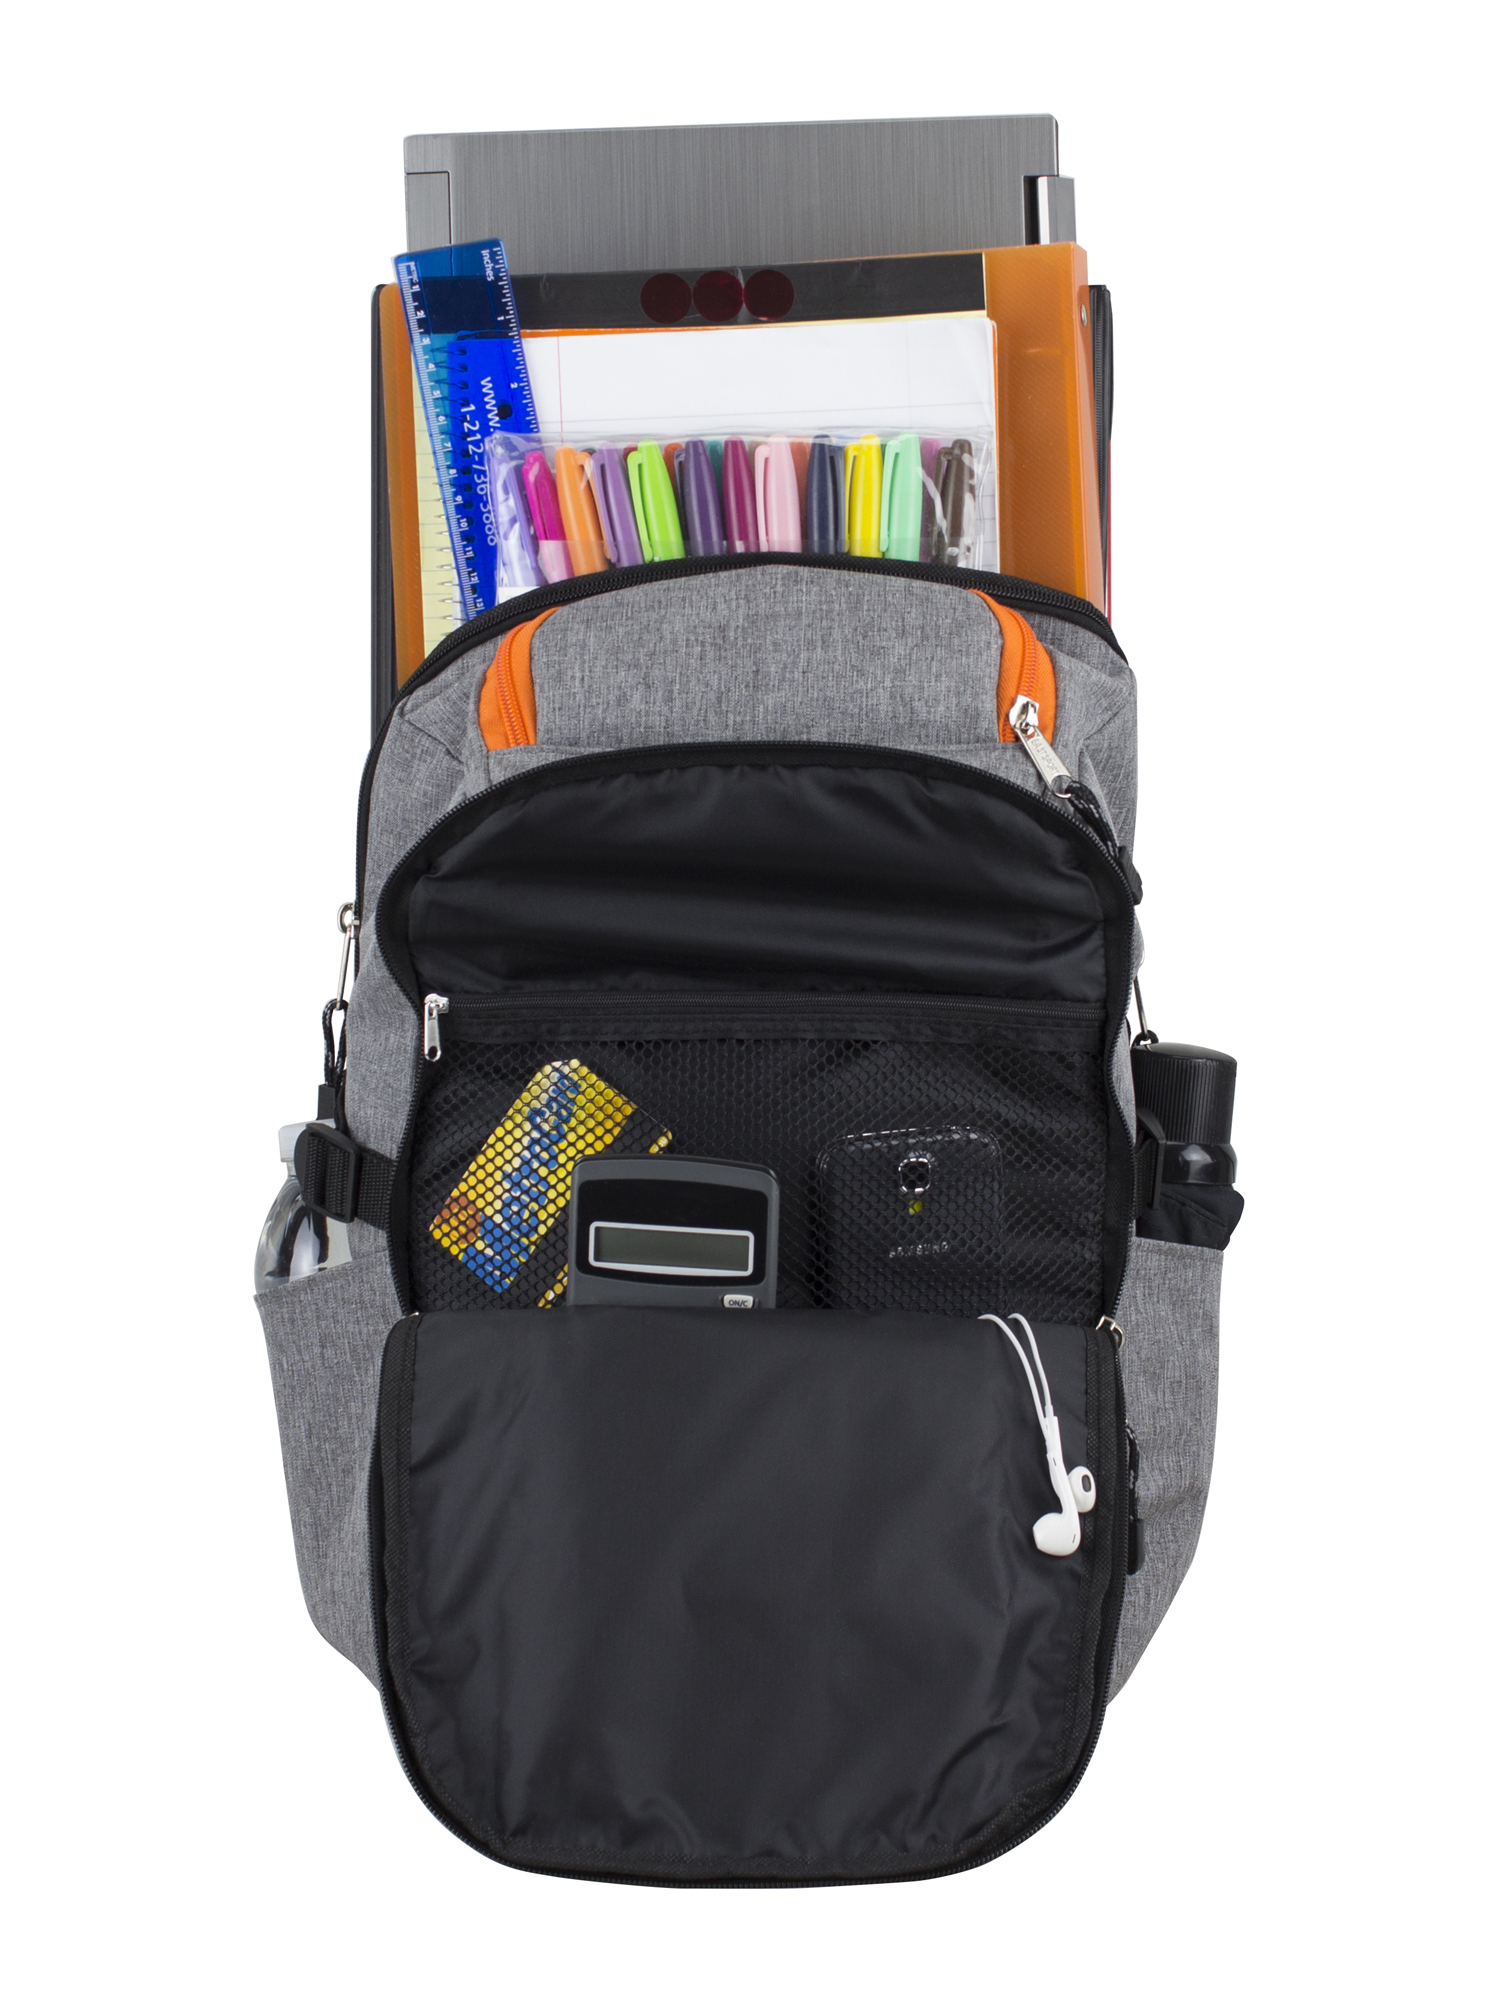 Eastsport Multi-Purpose Pro Defender Mid Grey Backpack with Adjustable Straps - image 3 of 6